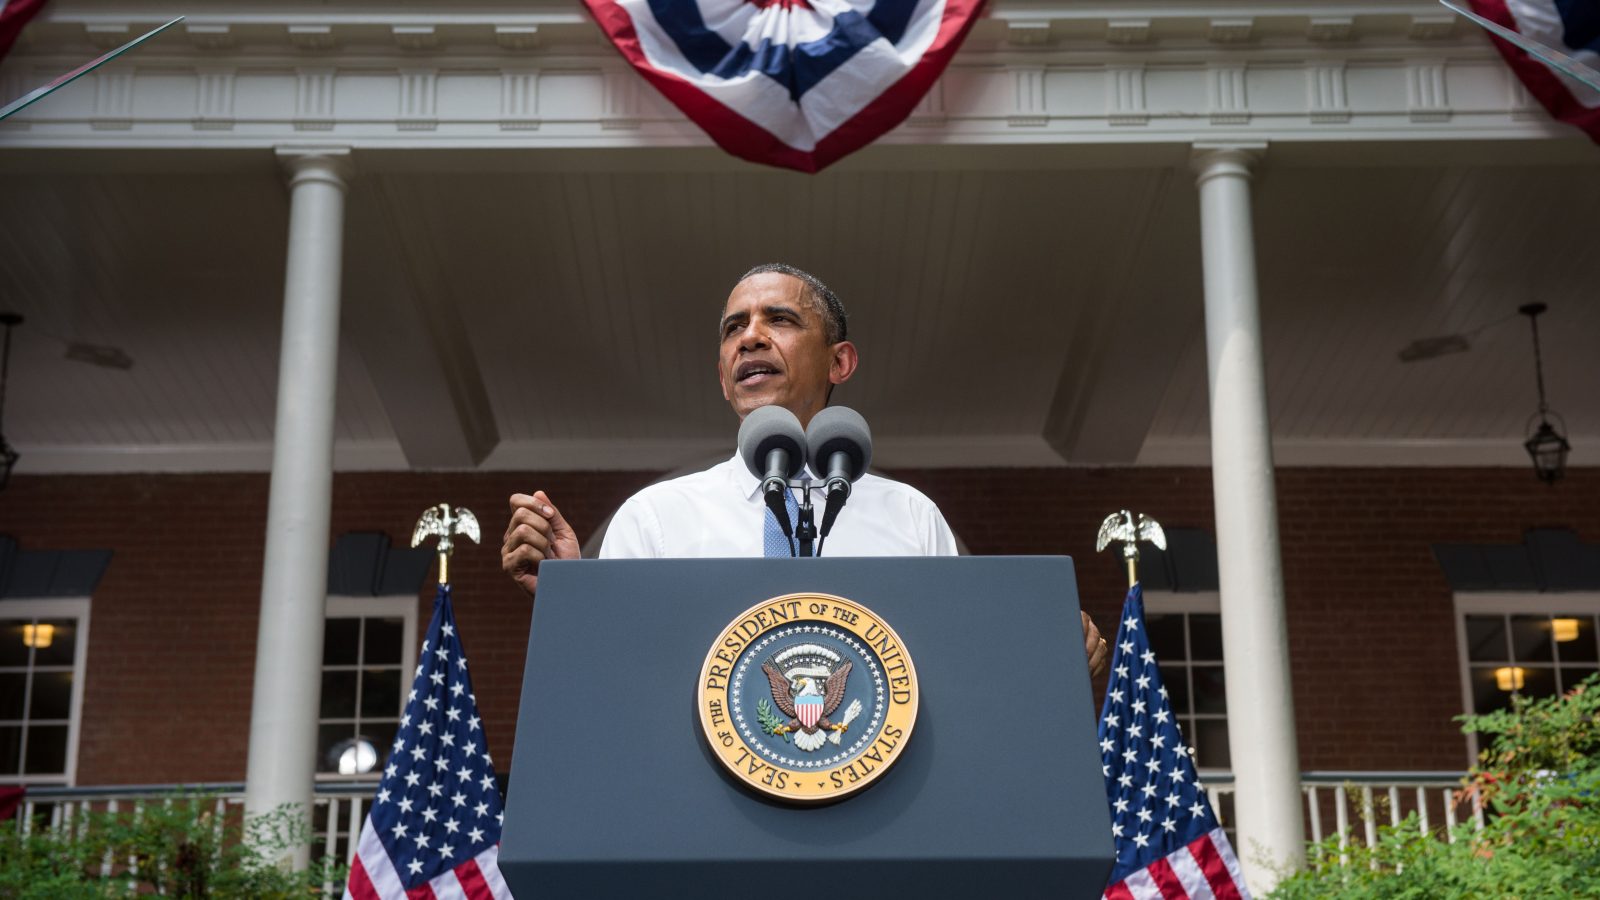 Barack Obama speaking at Georgetown